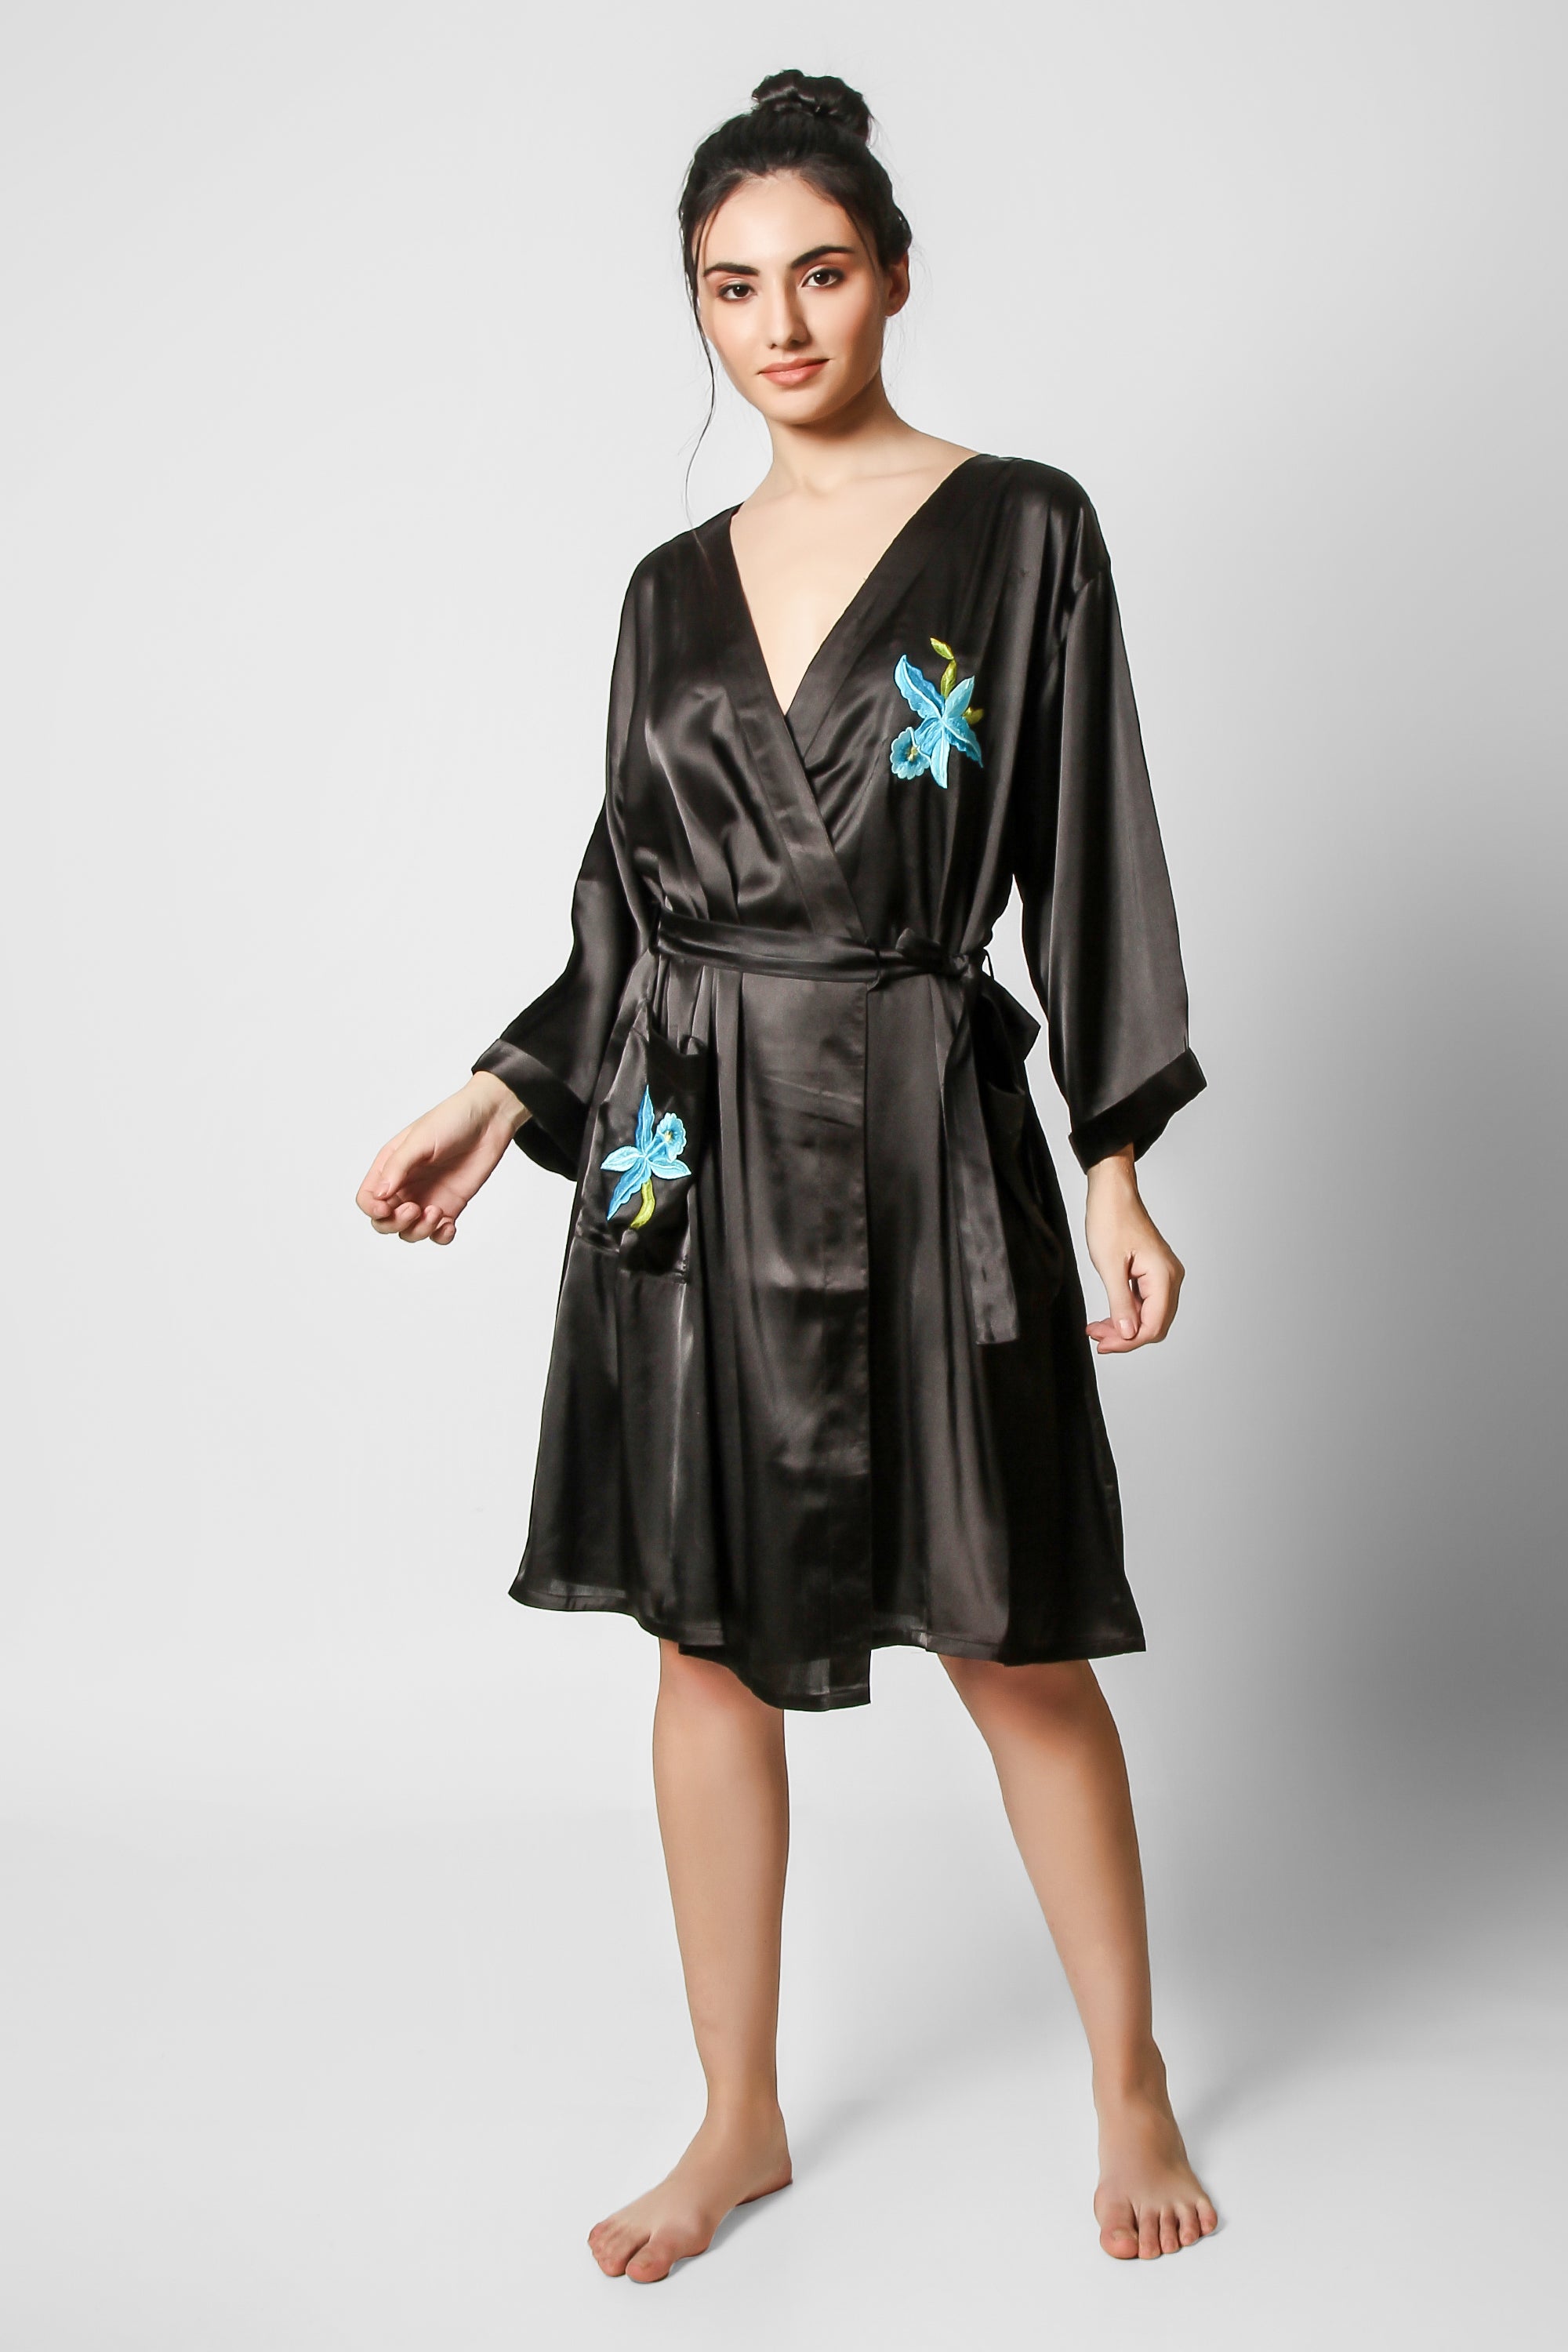 Women's Sexy Silk Satin Sleepwear Dress